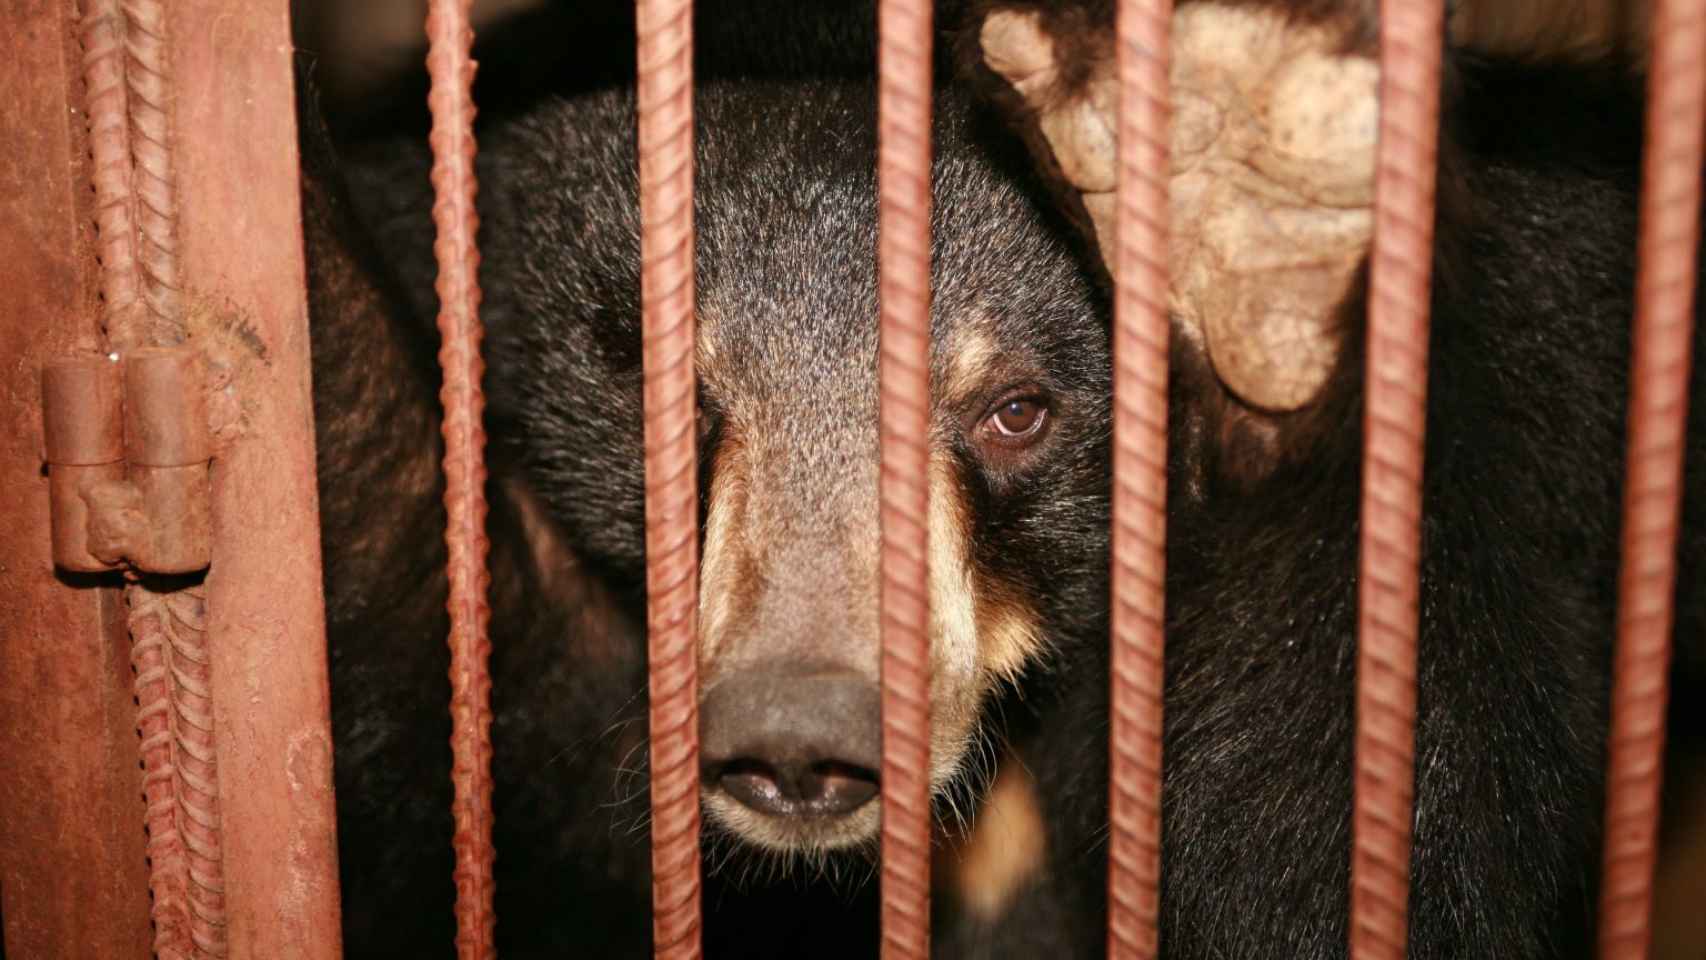 Imagen de un oso en cautiverio cedida por la organización World Animal Protection.